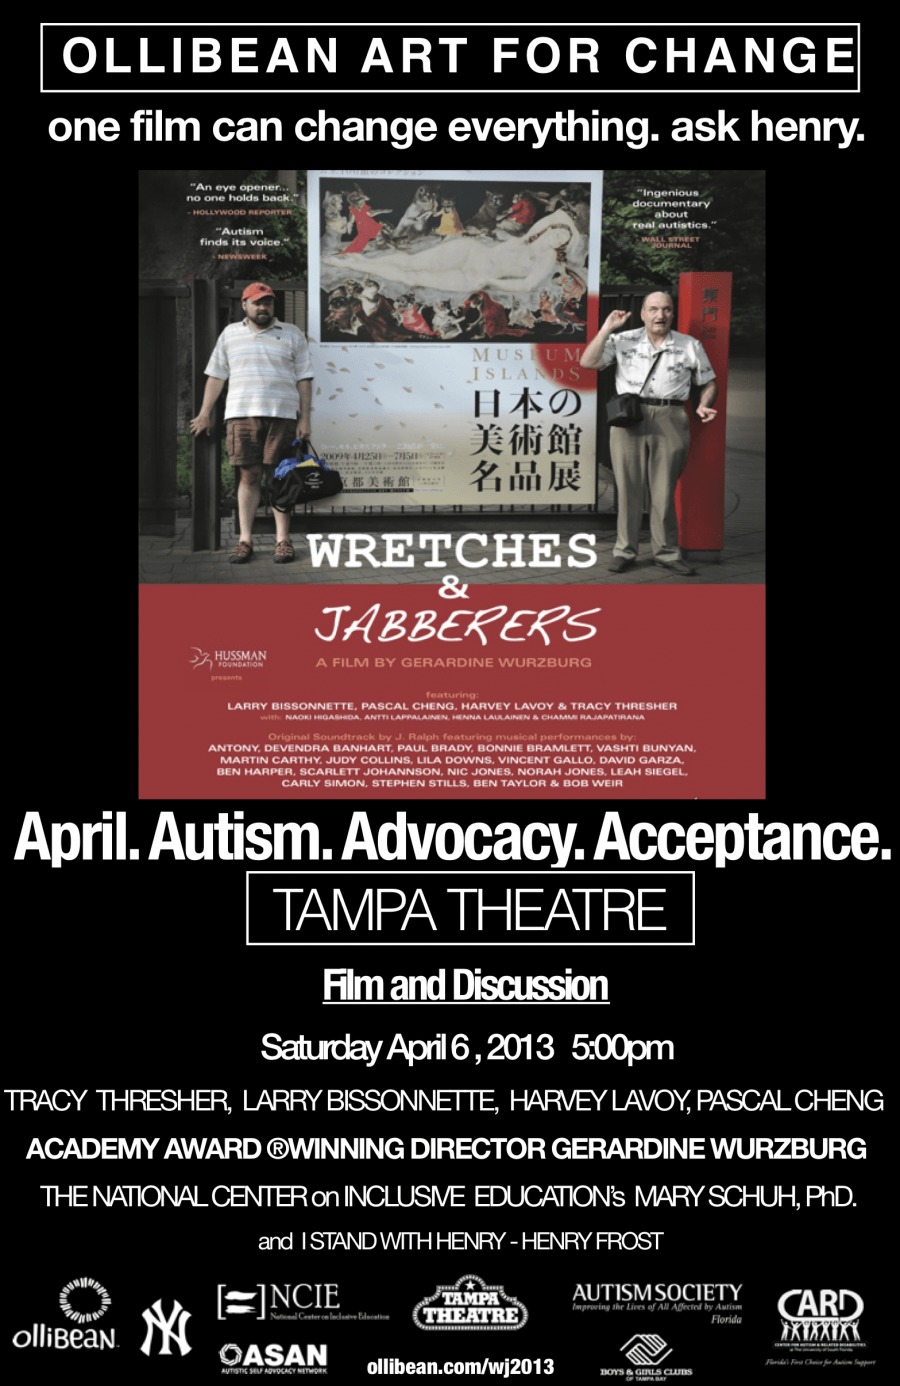 Ollibean Art for Change Tampa Theatre April 6